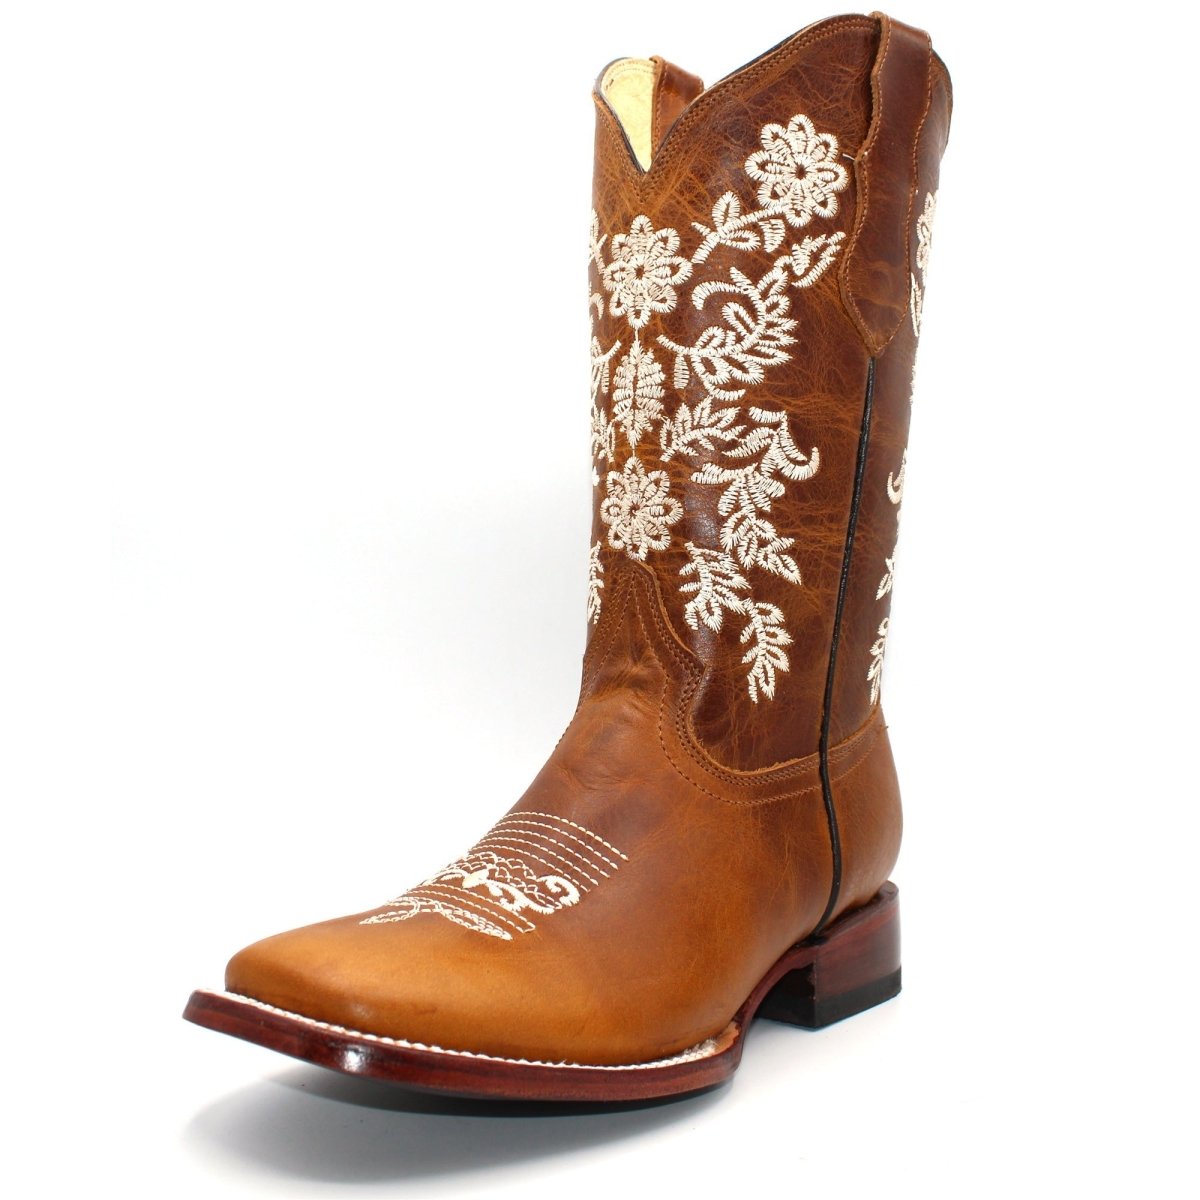 Women's Wide Square Toe Western Boot - White Flowers - CharroAzteca.com